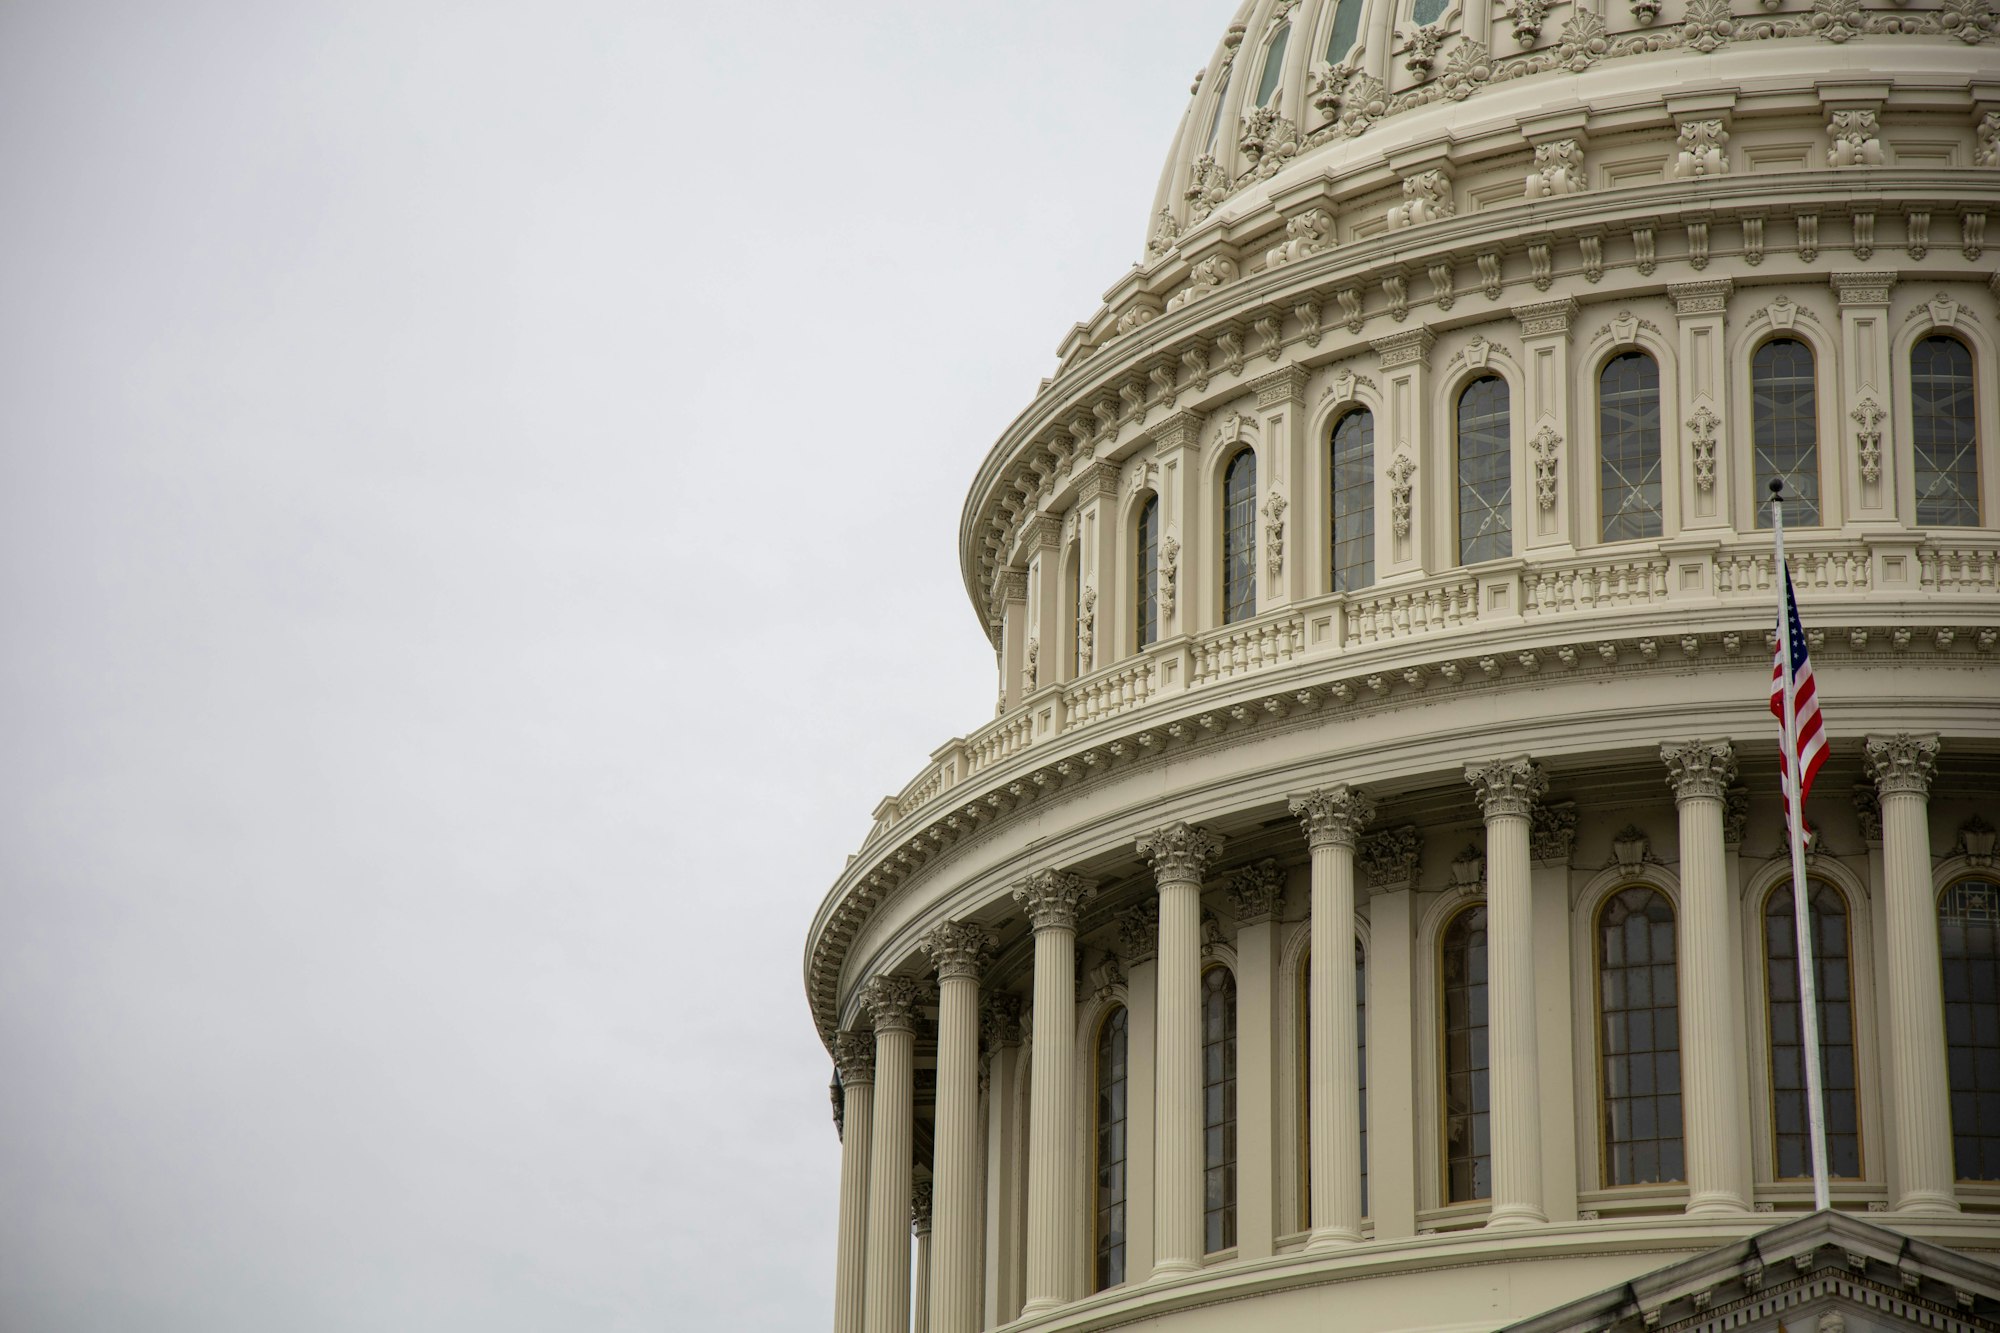 The United States Capitol Rotunda